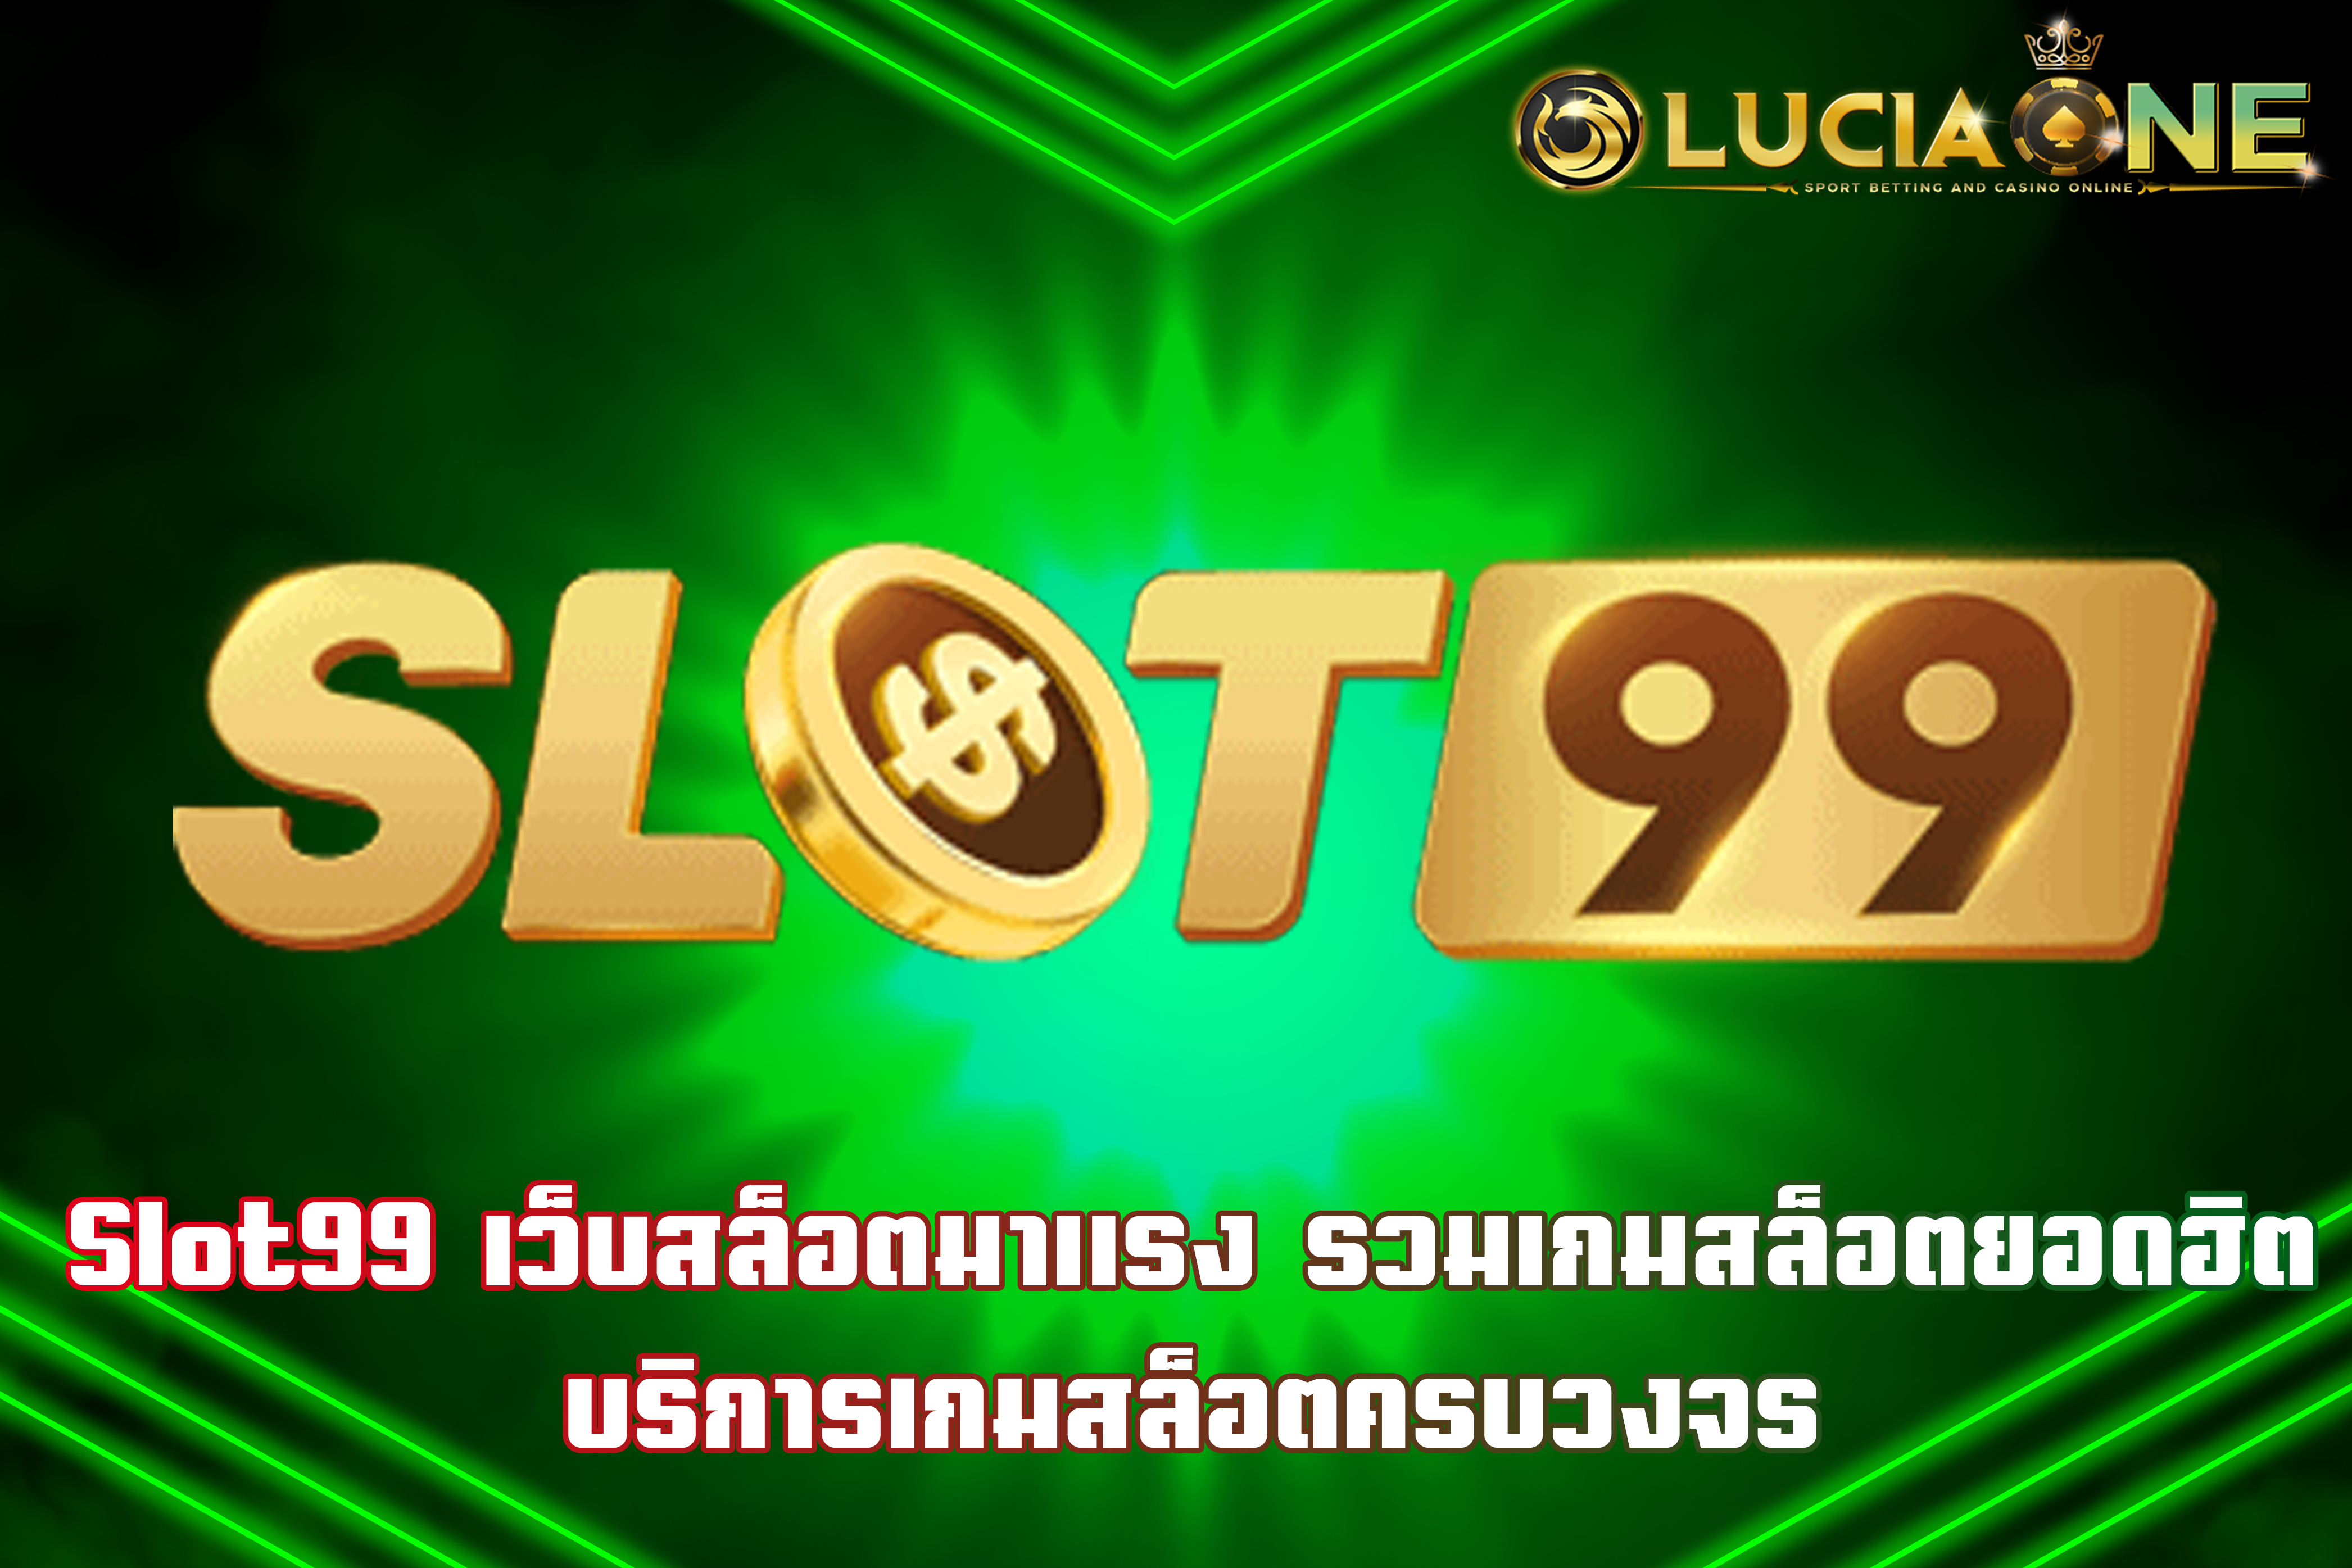 Slot99